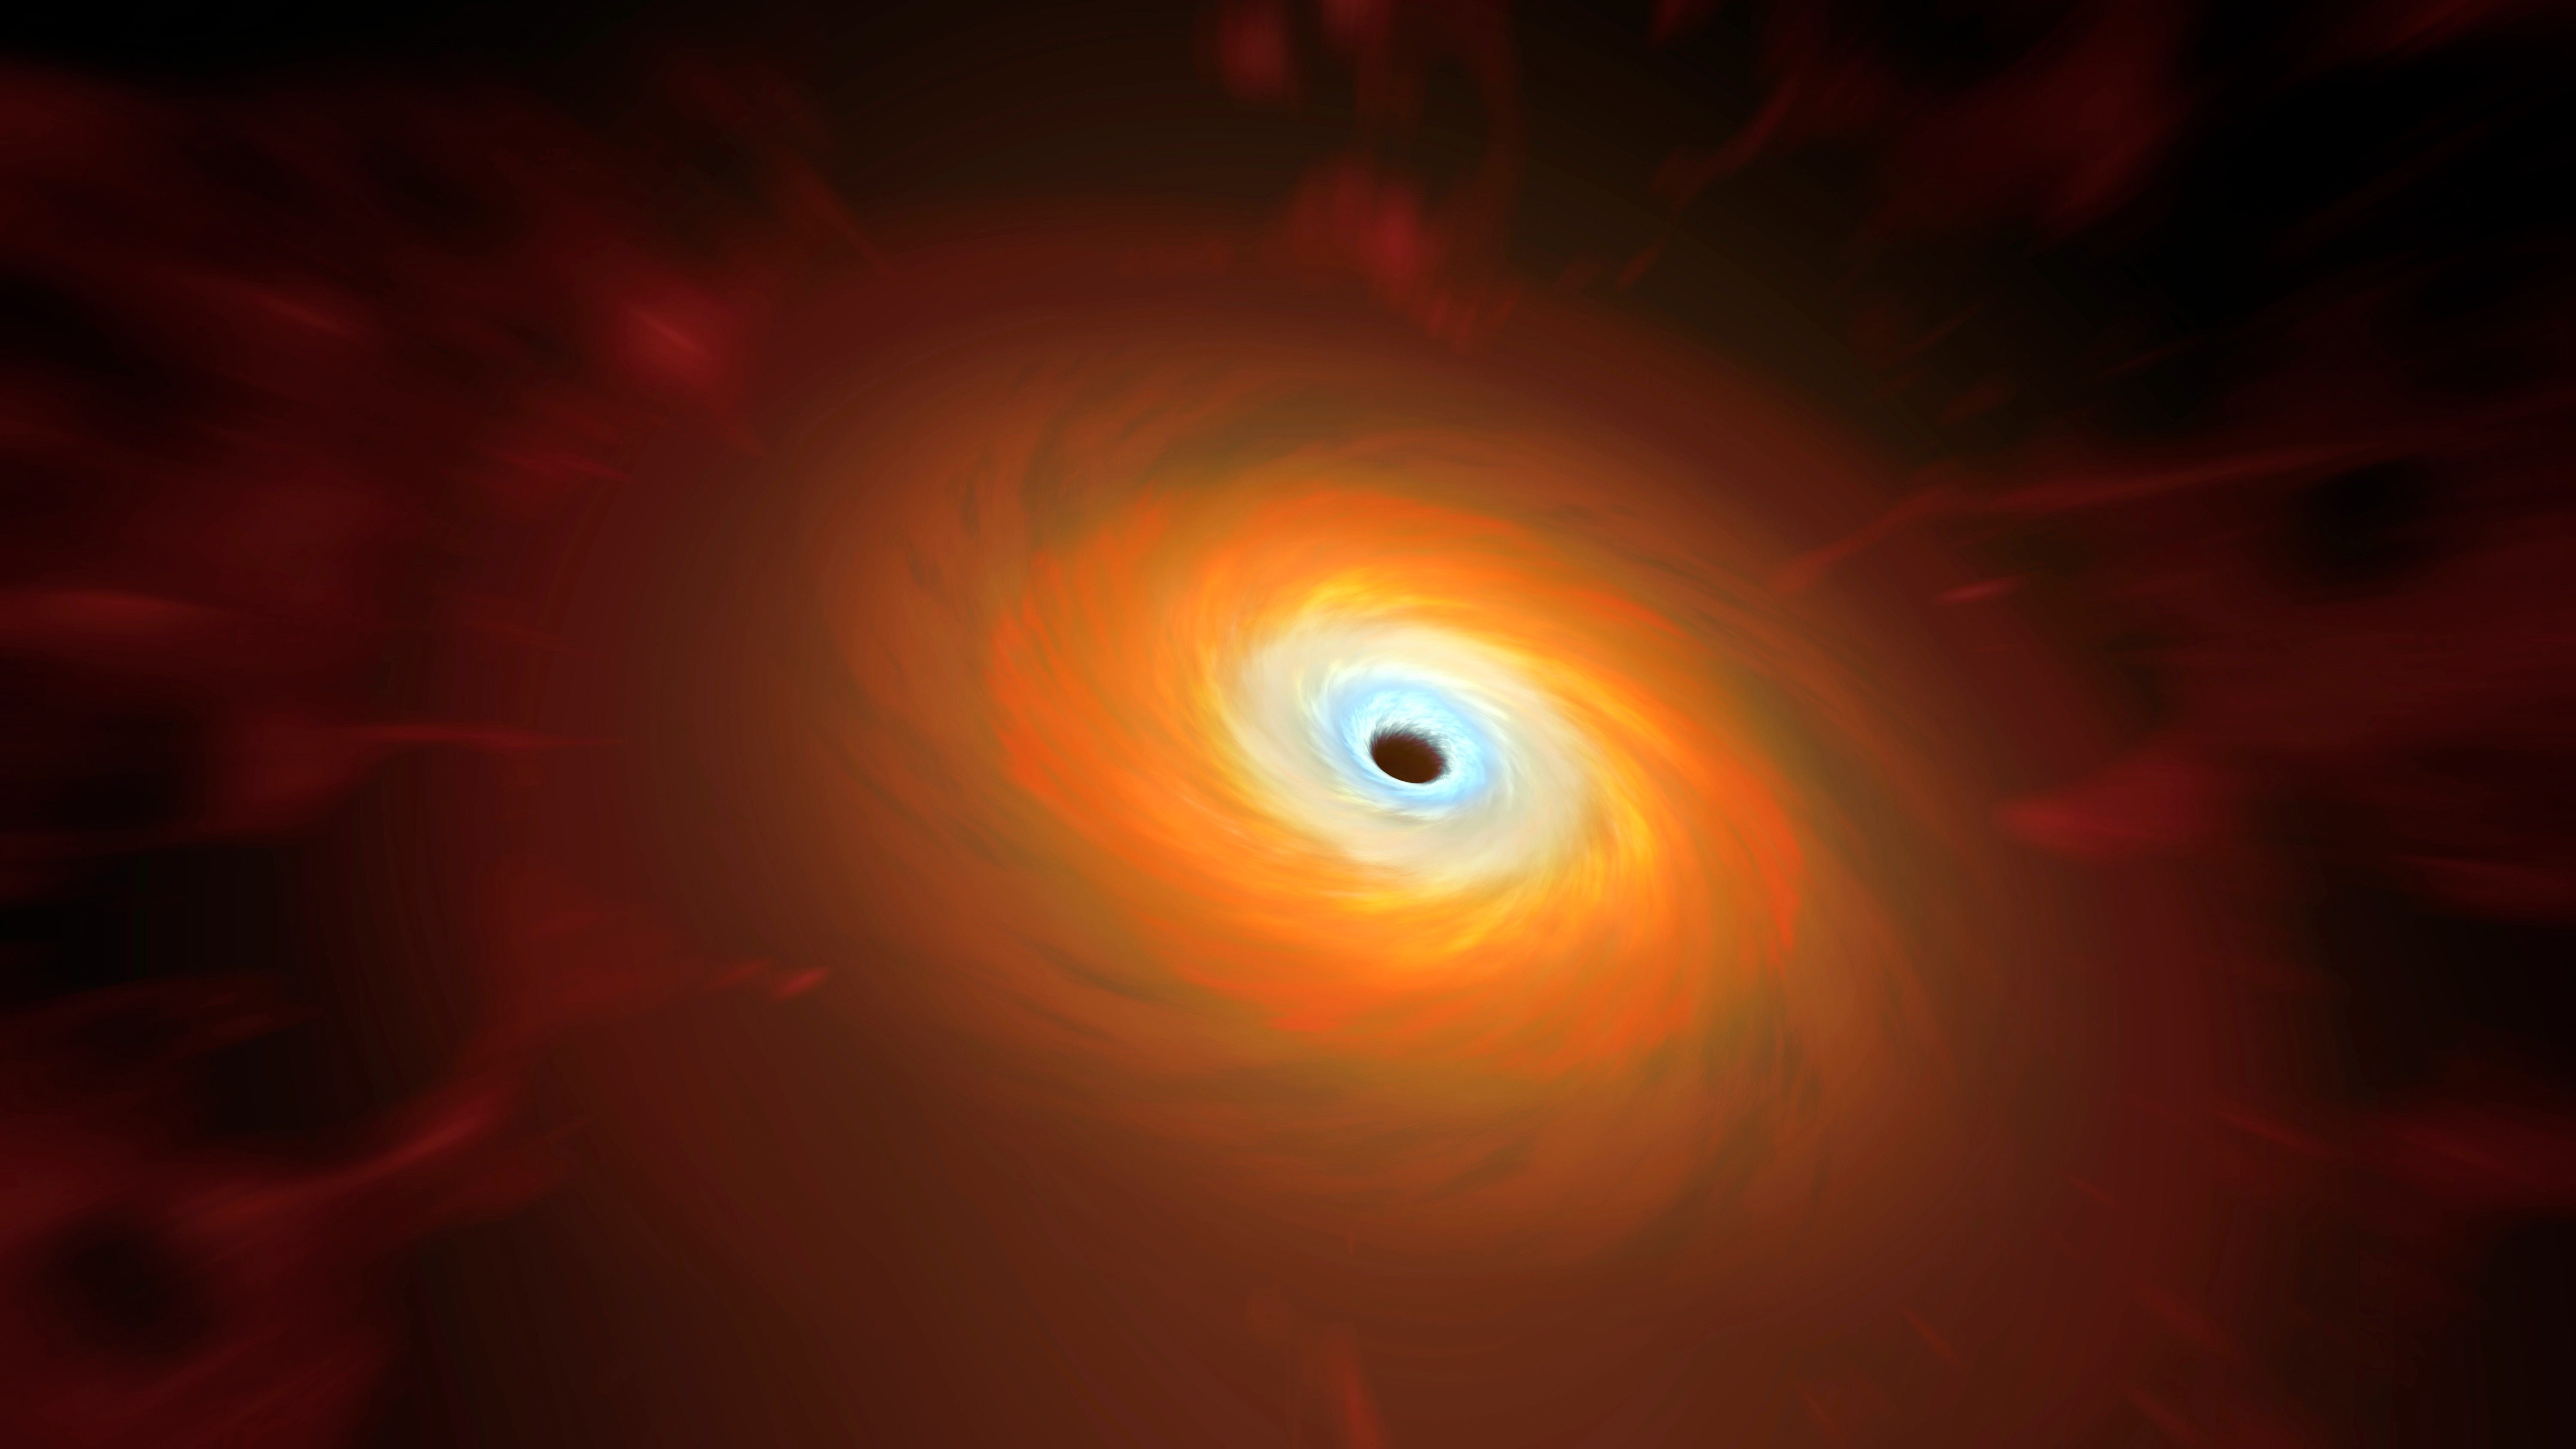 Supermassive Black Holes Could Explain Dark Energy's Mysterious Origins, Scientists Say